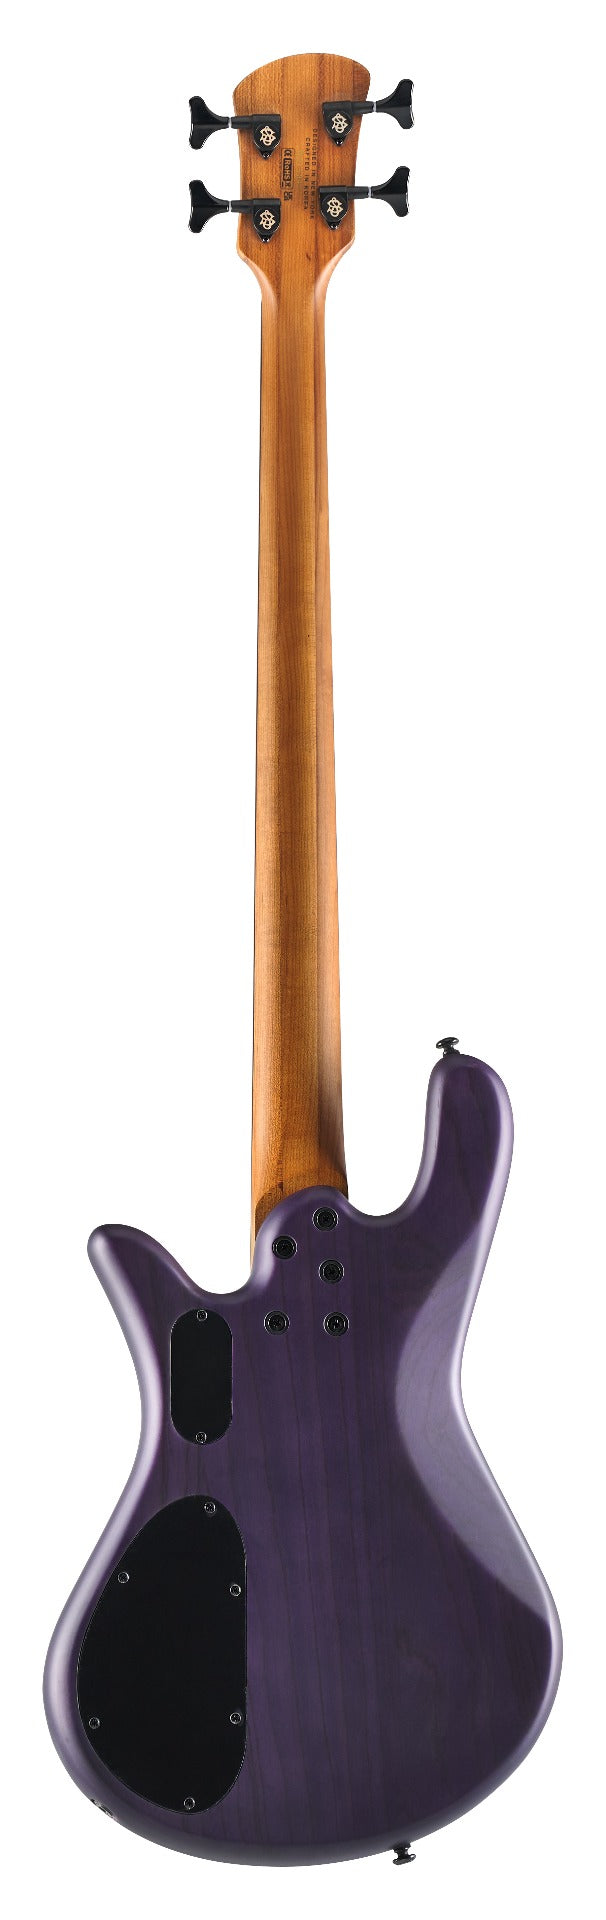 Spector NS Pulse 4 String Bass in Ultra Violet Matte